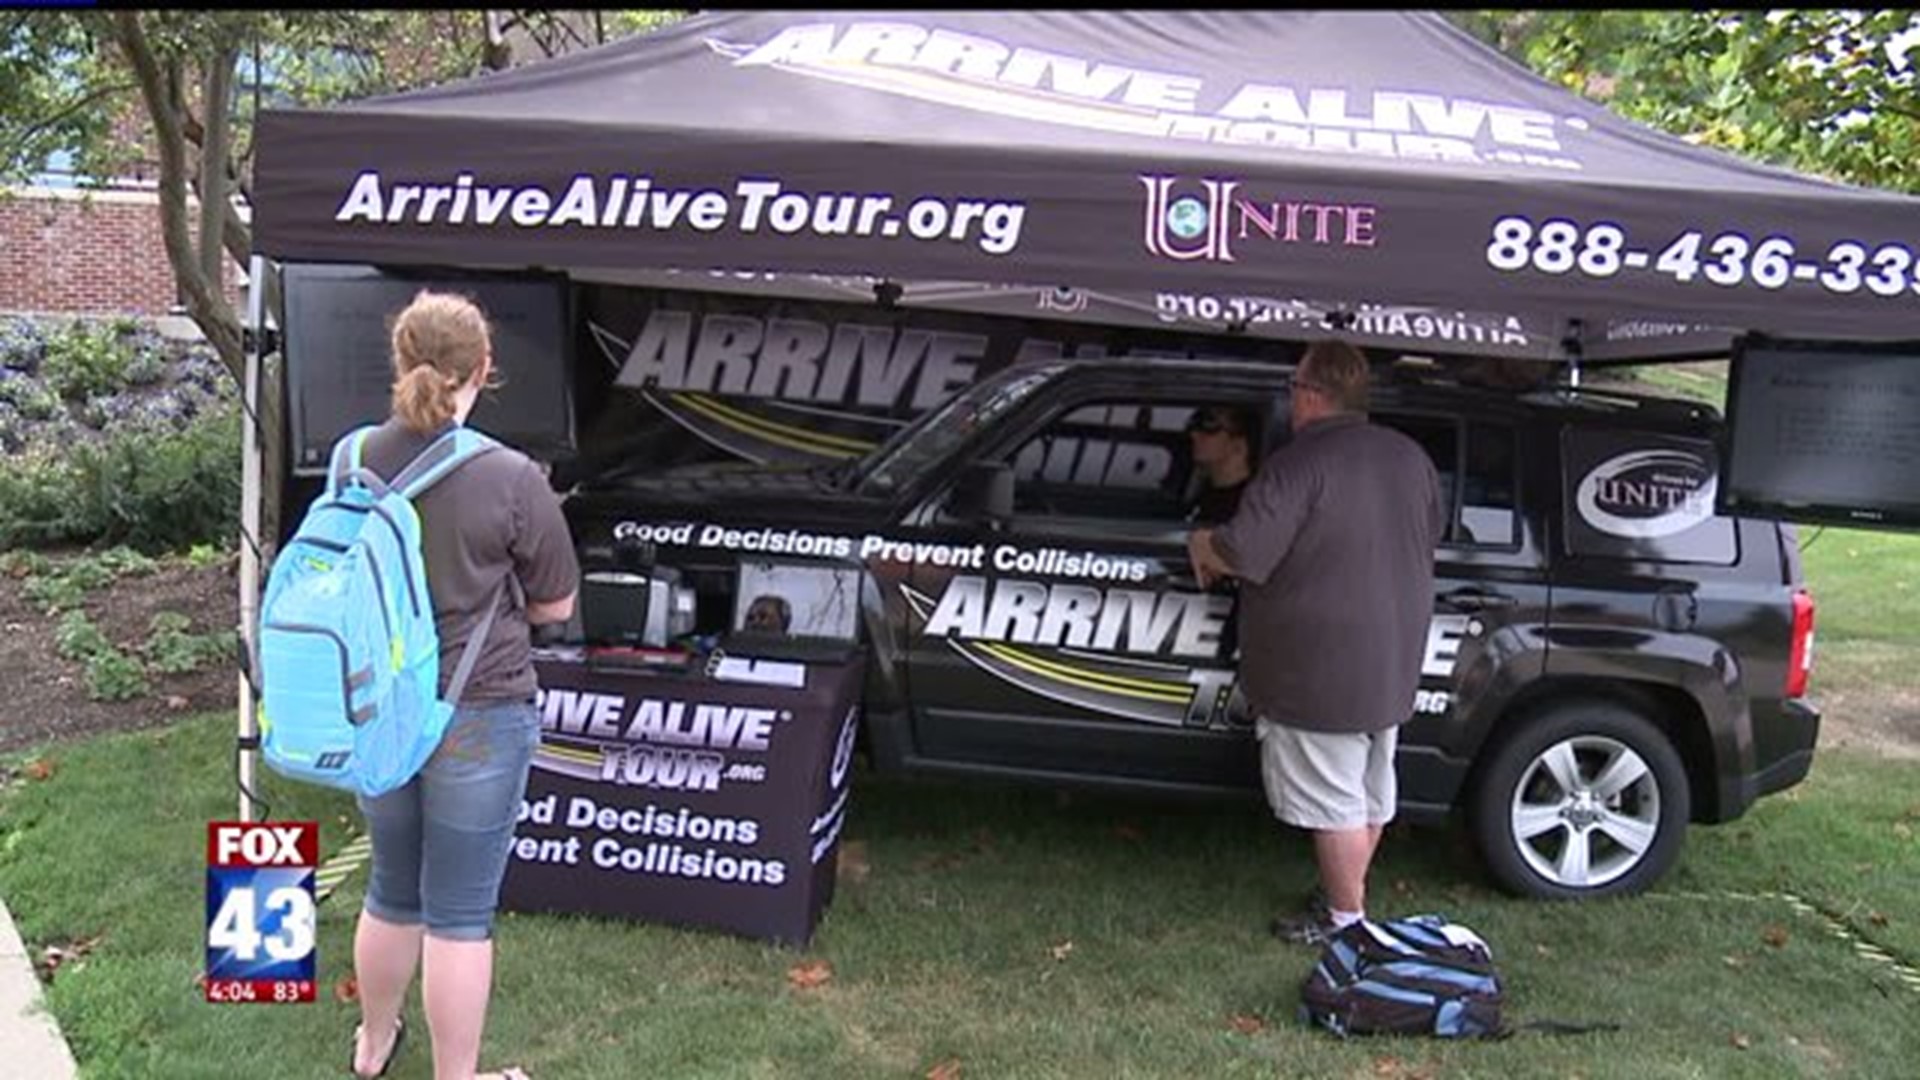 "Arrive Alive" program